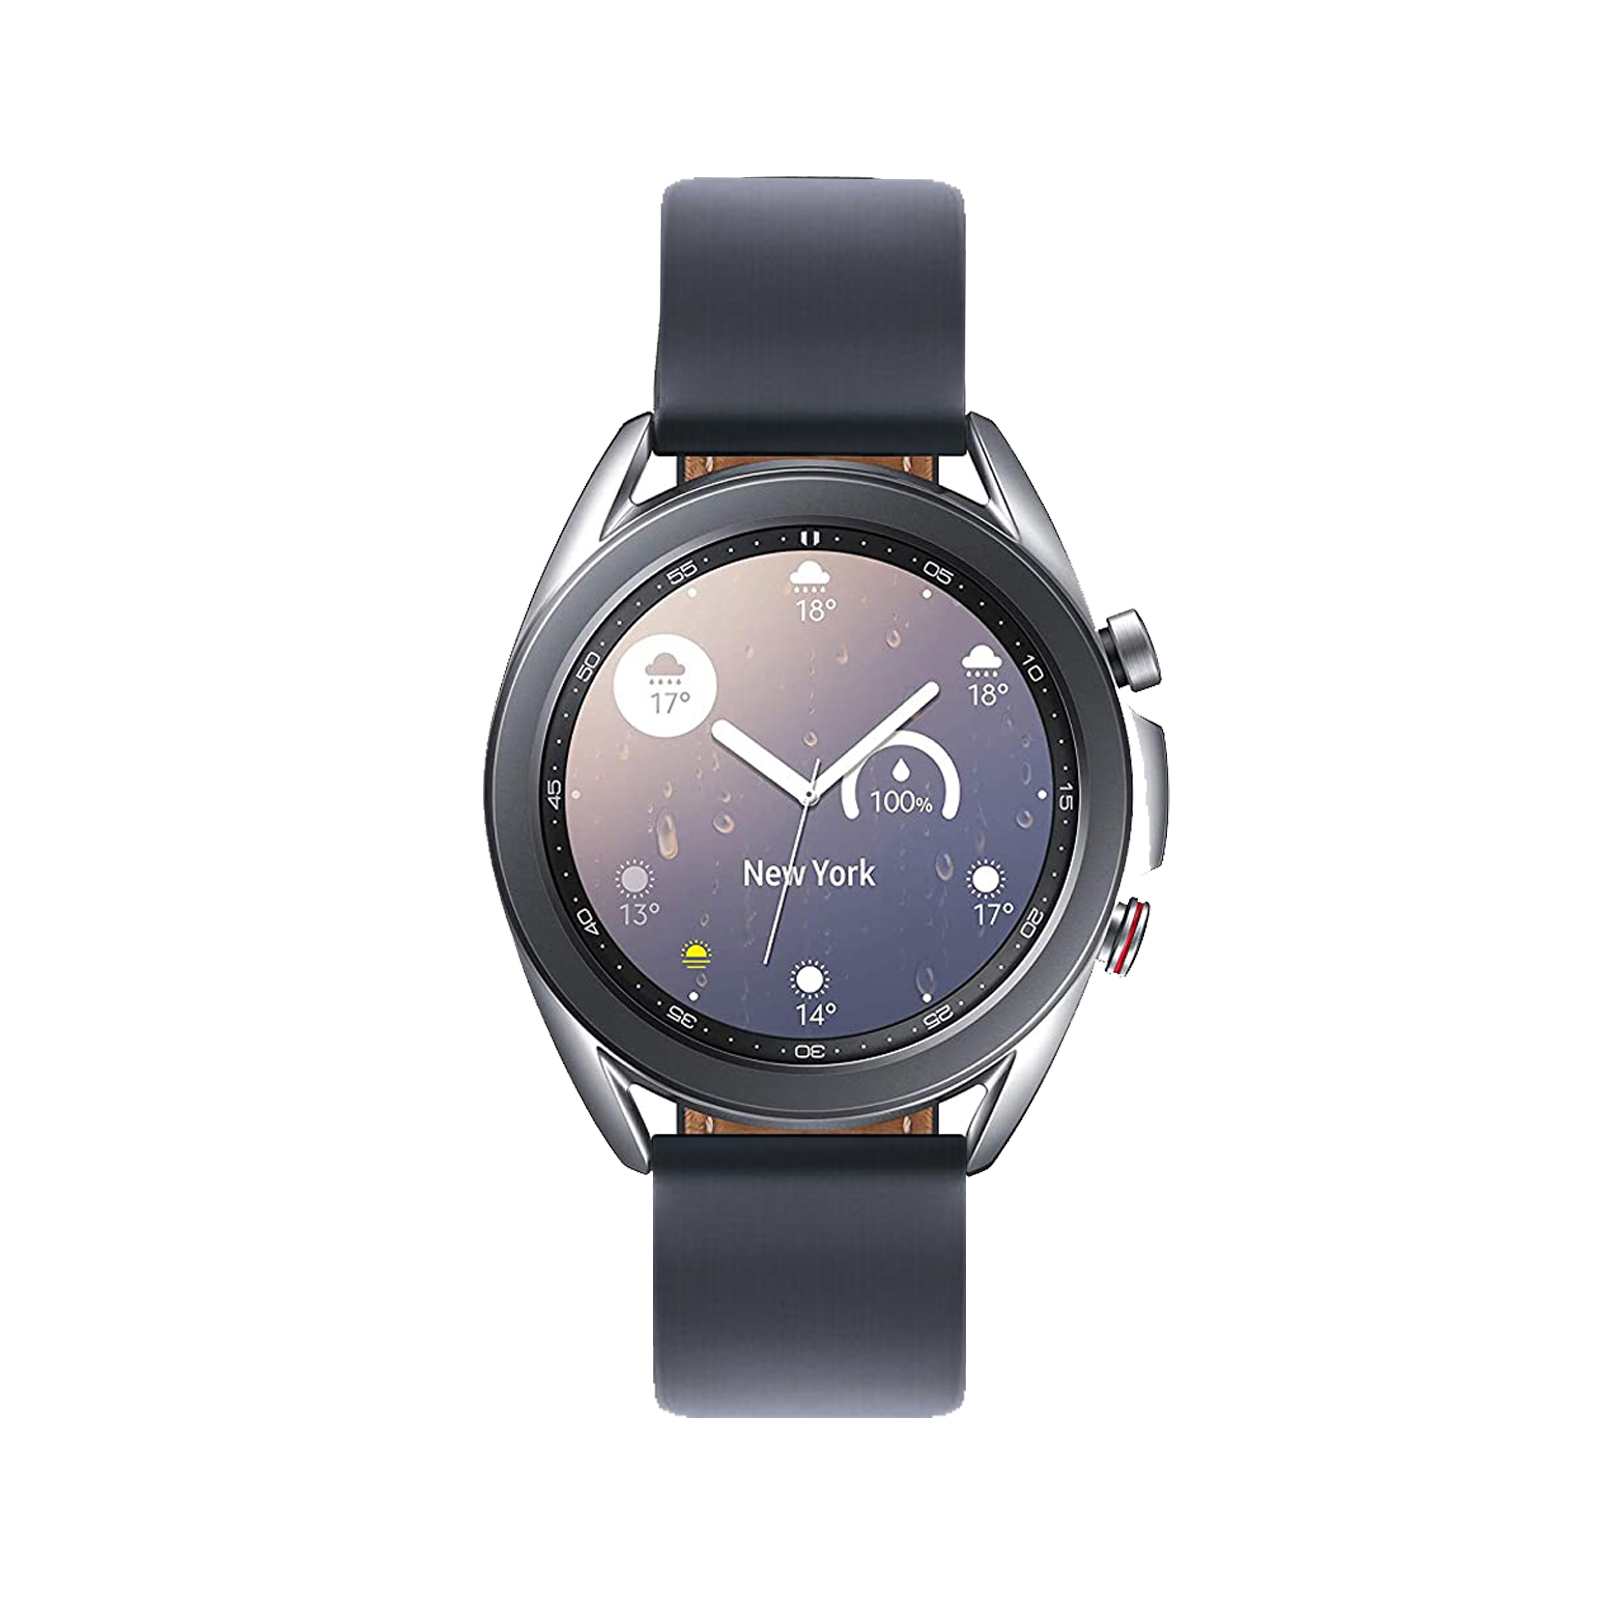 Samsung Galaxy Watch 3 [Wi+Fi + Cellular] [41mm] [Silver] [Excellent]